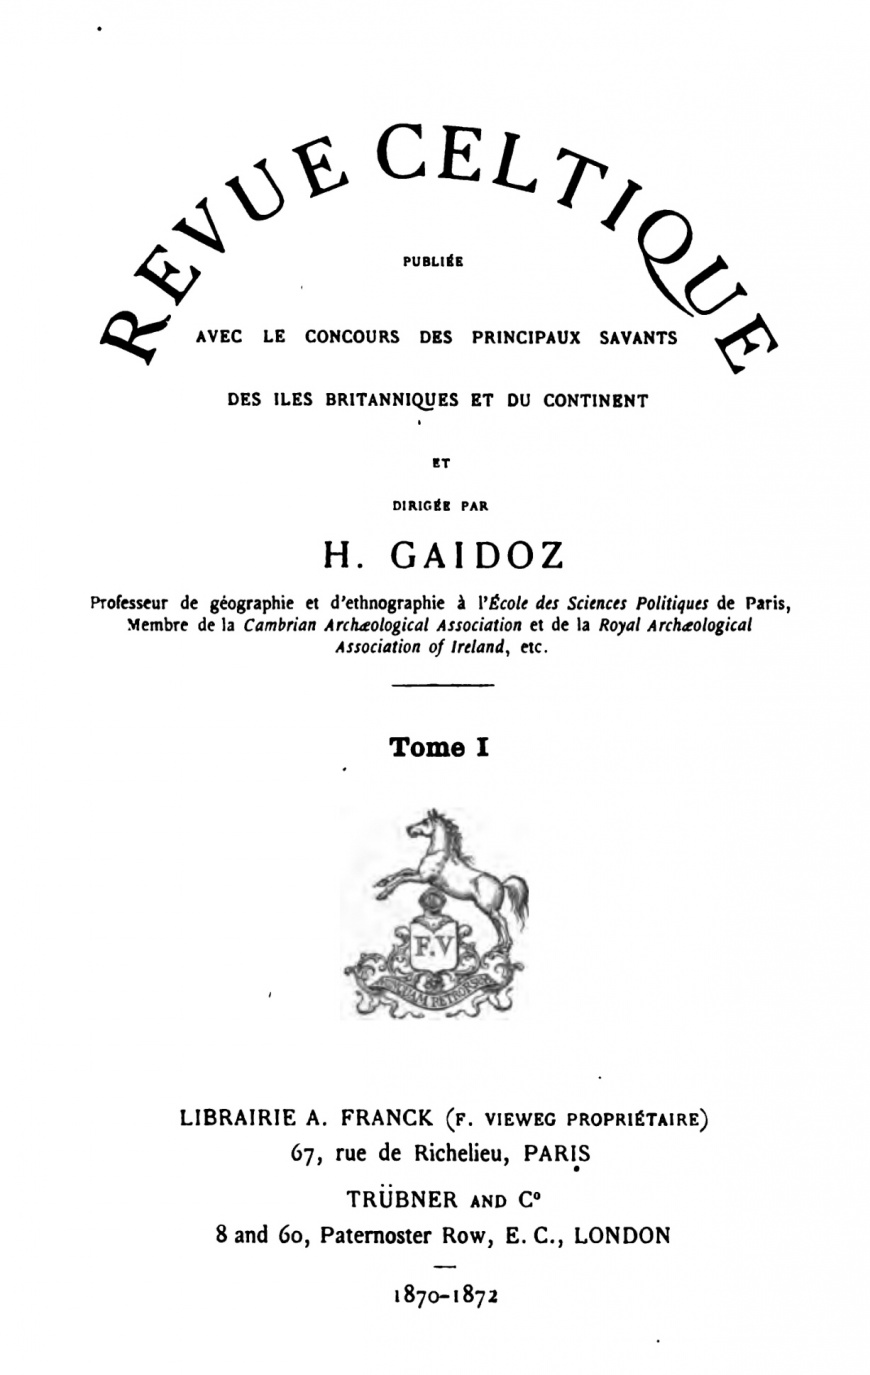 Image:RevueCeltique1872.jpg